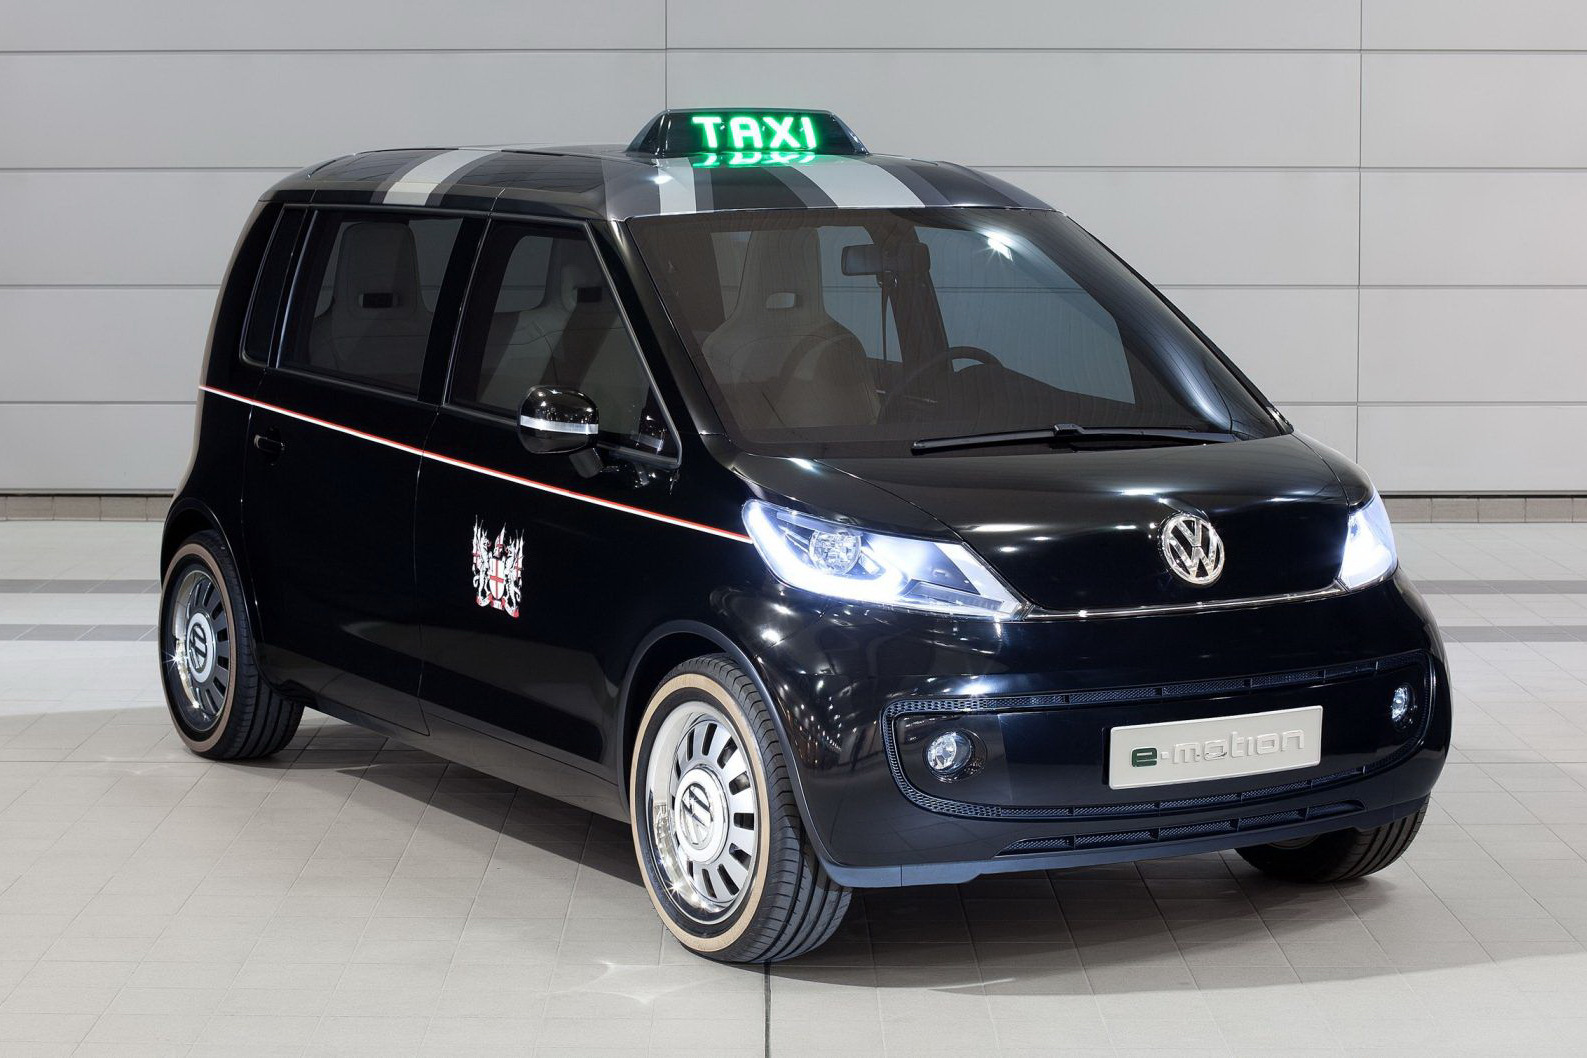 Volkswagen London Taxi Concept este acelasi lucru cu VW Milano Taxi